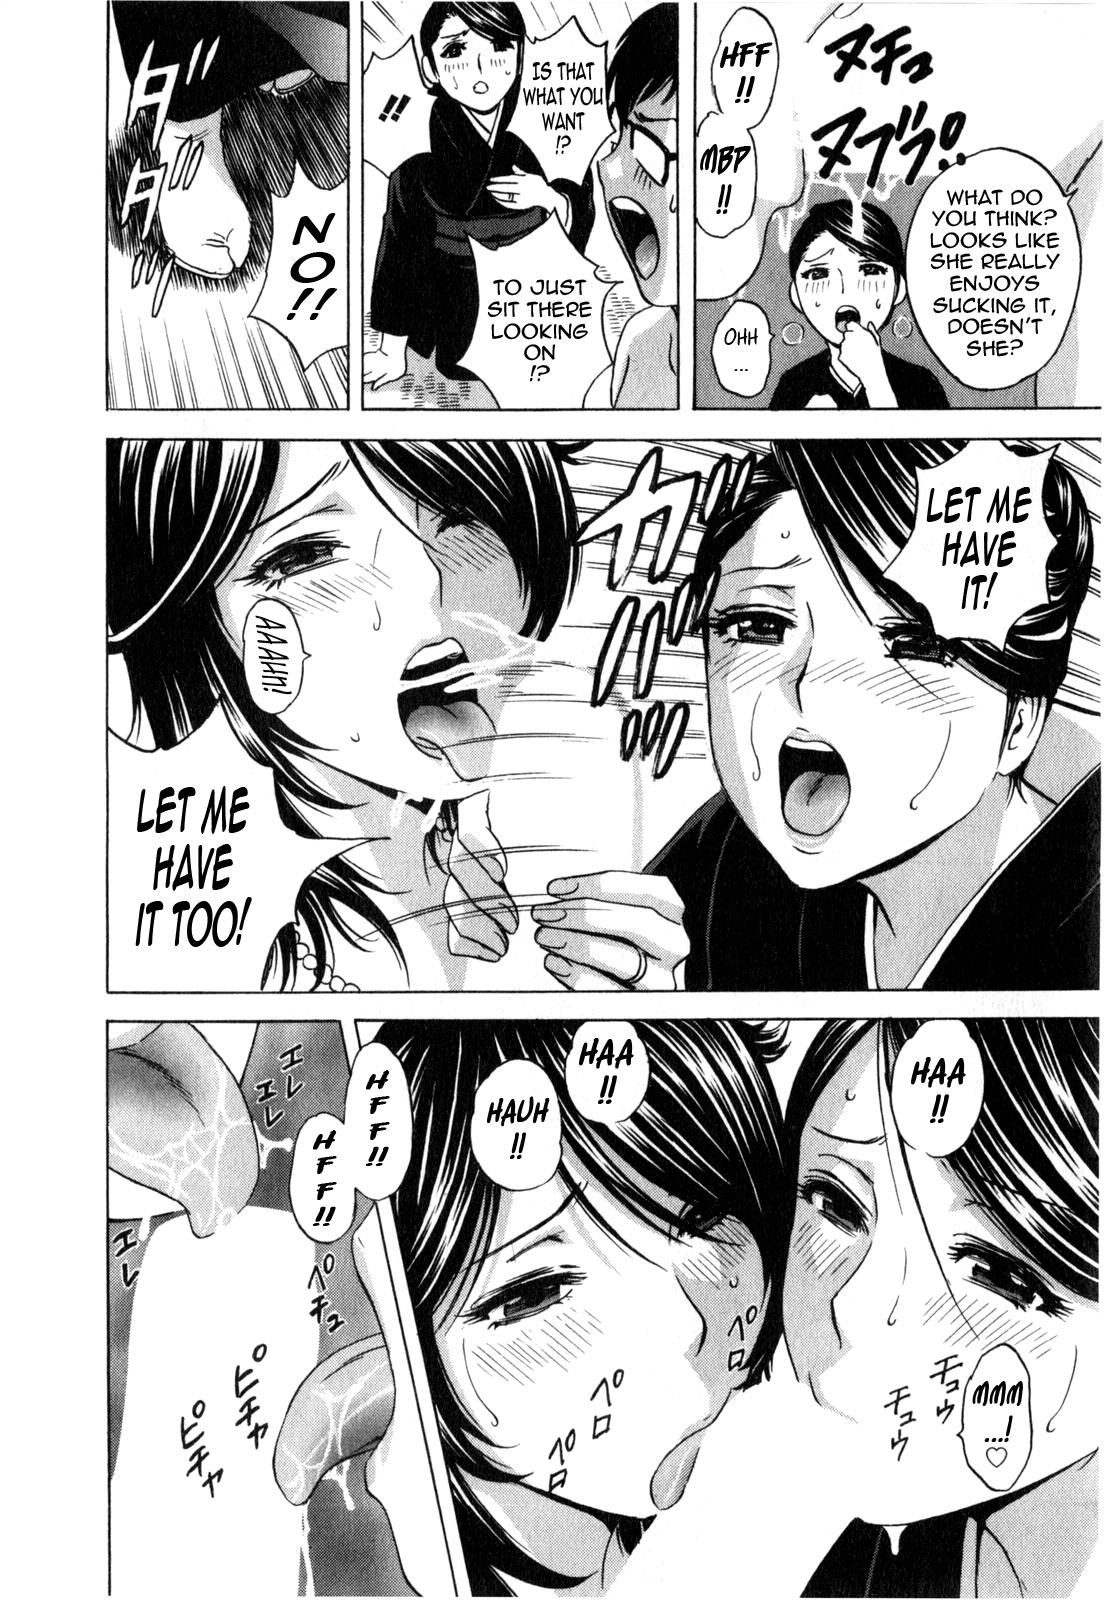 [Hidemaru] Life with Married Women Just Like a Manga 3 - Ch. 1-5 [English] {Tadanohito} 97